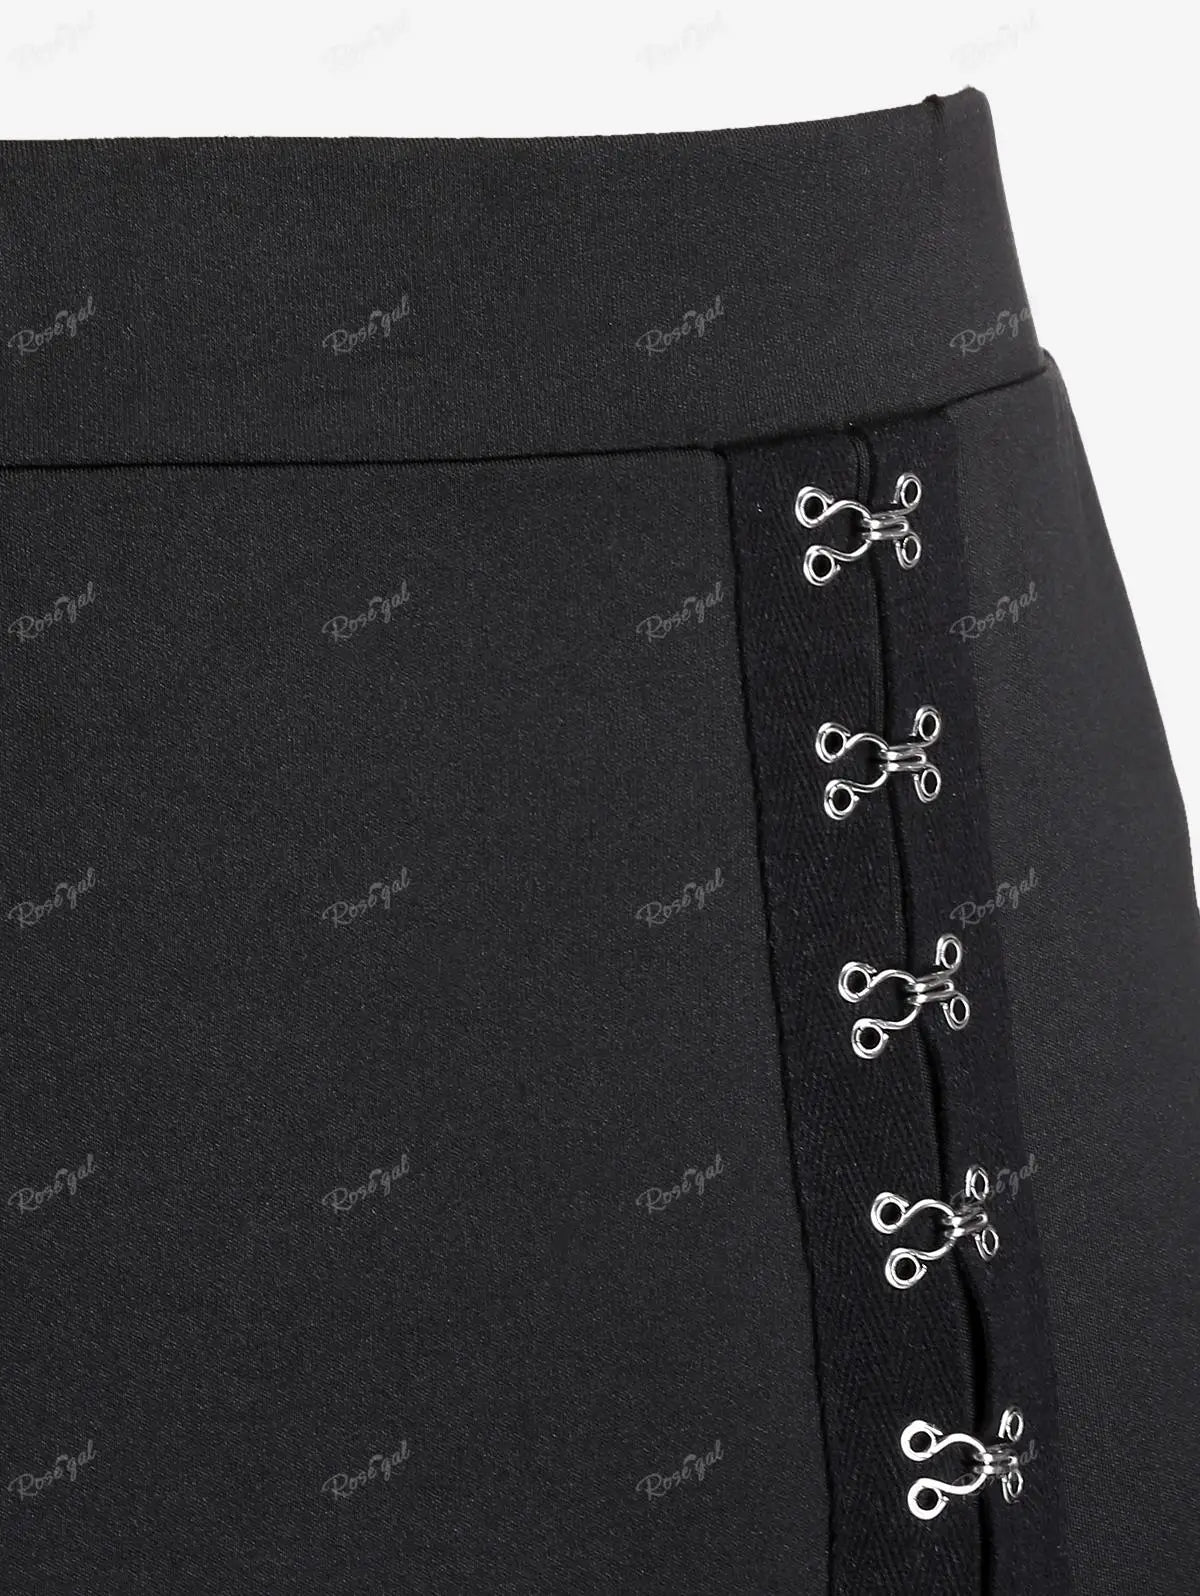 ROSEGAL Plus Size Black Split Skirt | Women's Casual Elastic Waist Buckle Sheath Bottoms